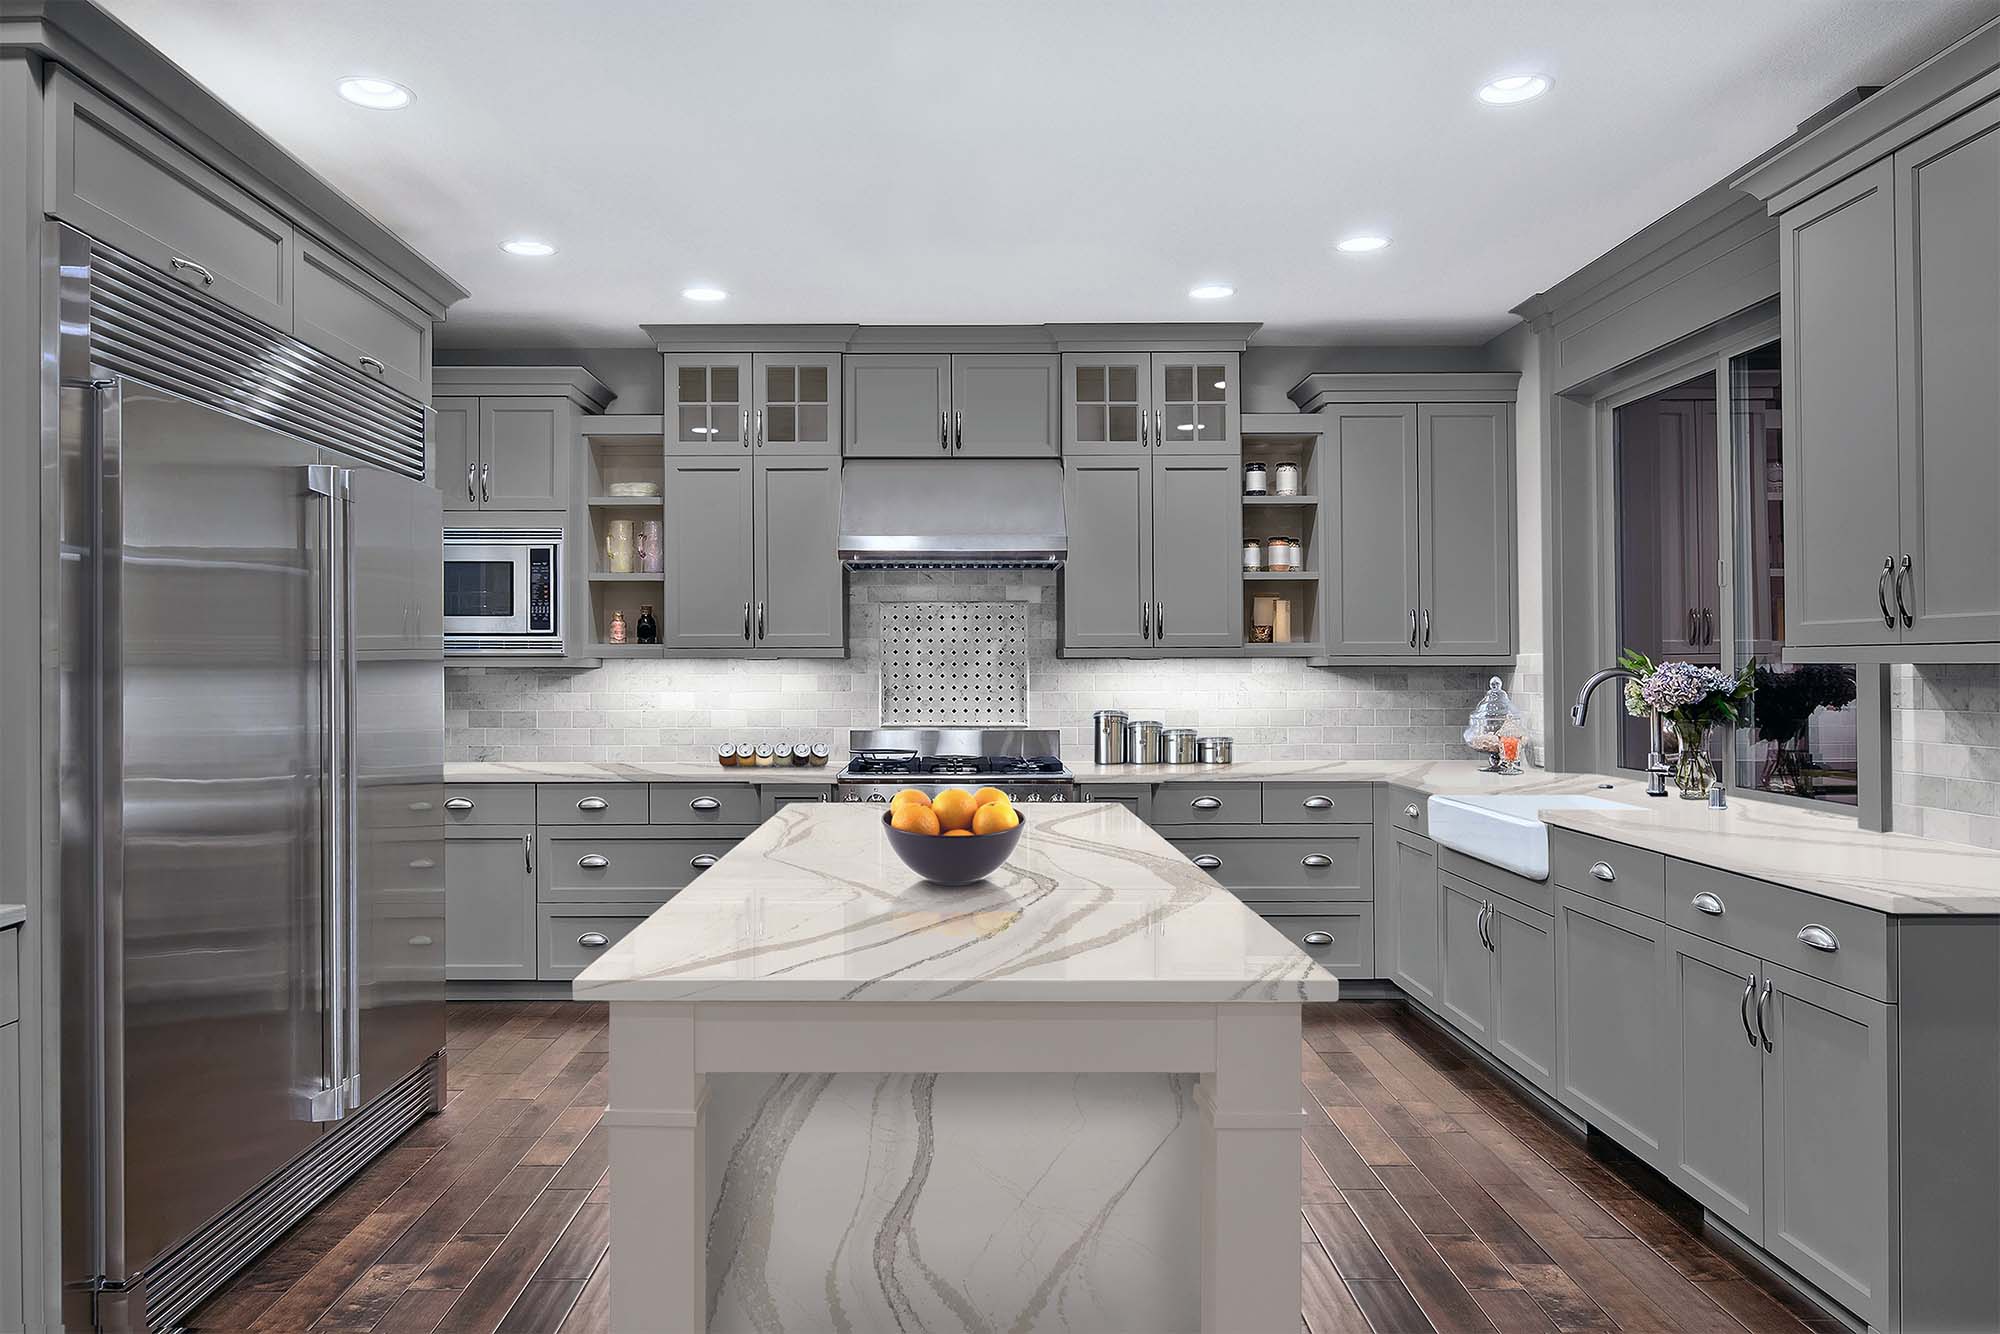 stunning luxury kitchen gray shaker cabinets marble countertops and backsplash center island